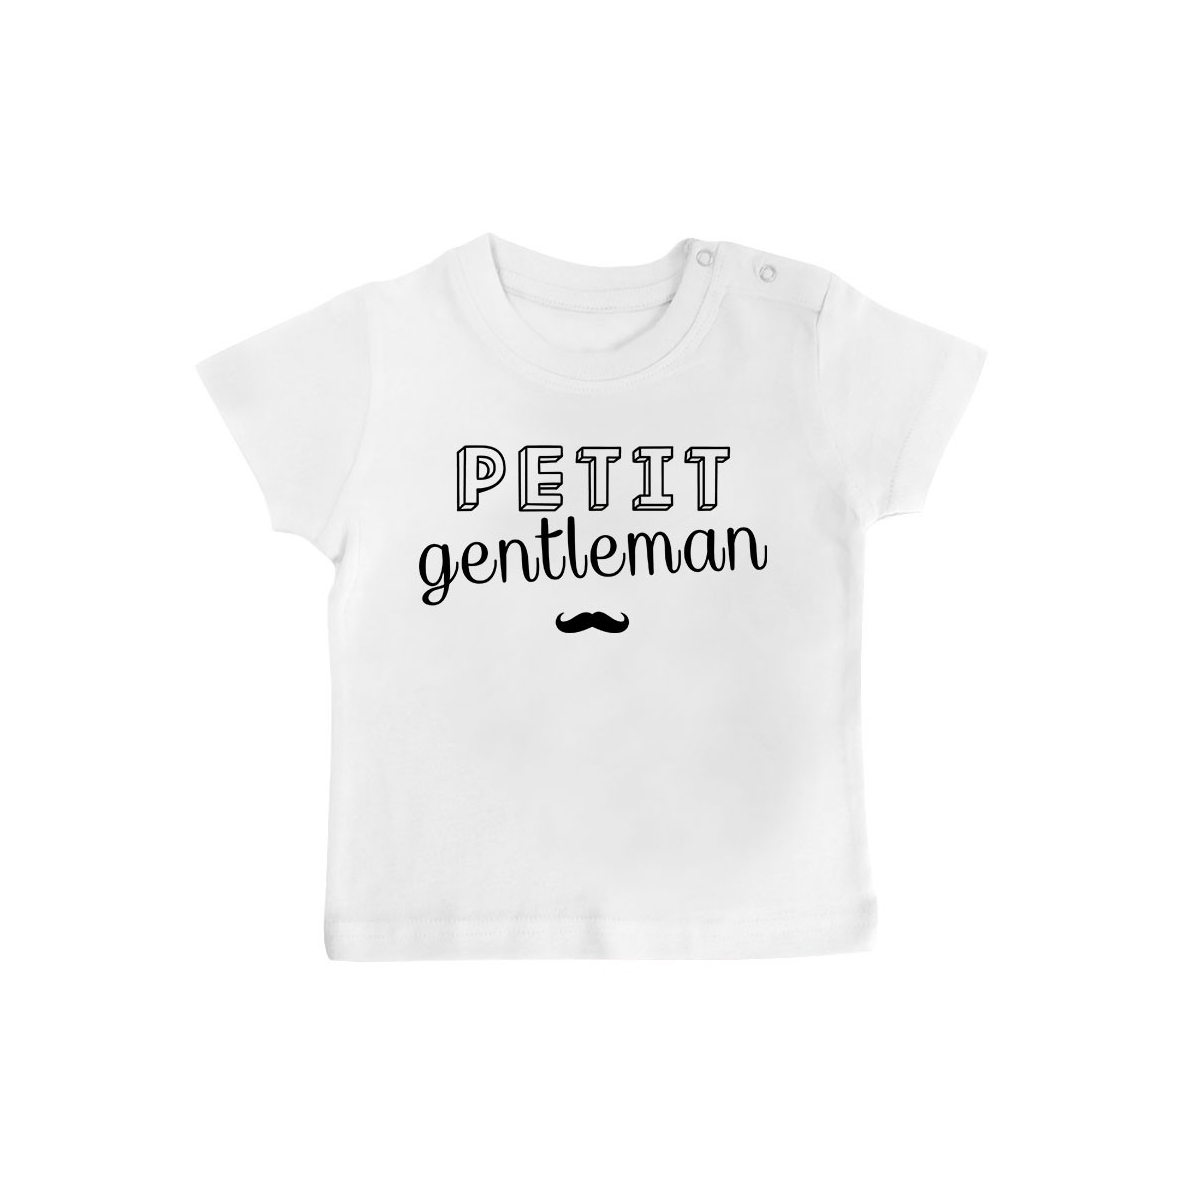 T-Shirt bébé Petit gentleman